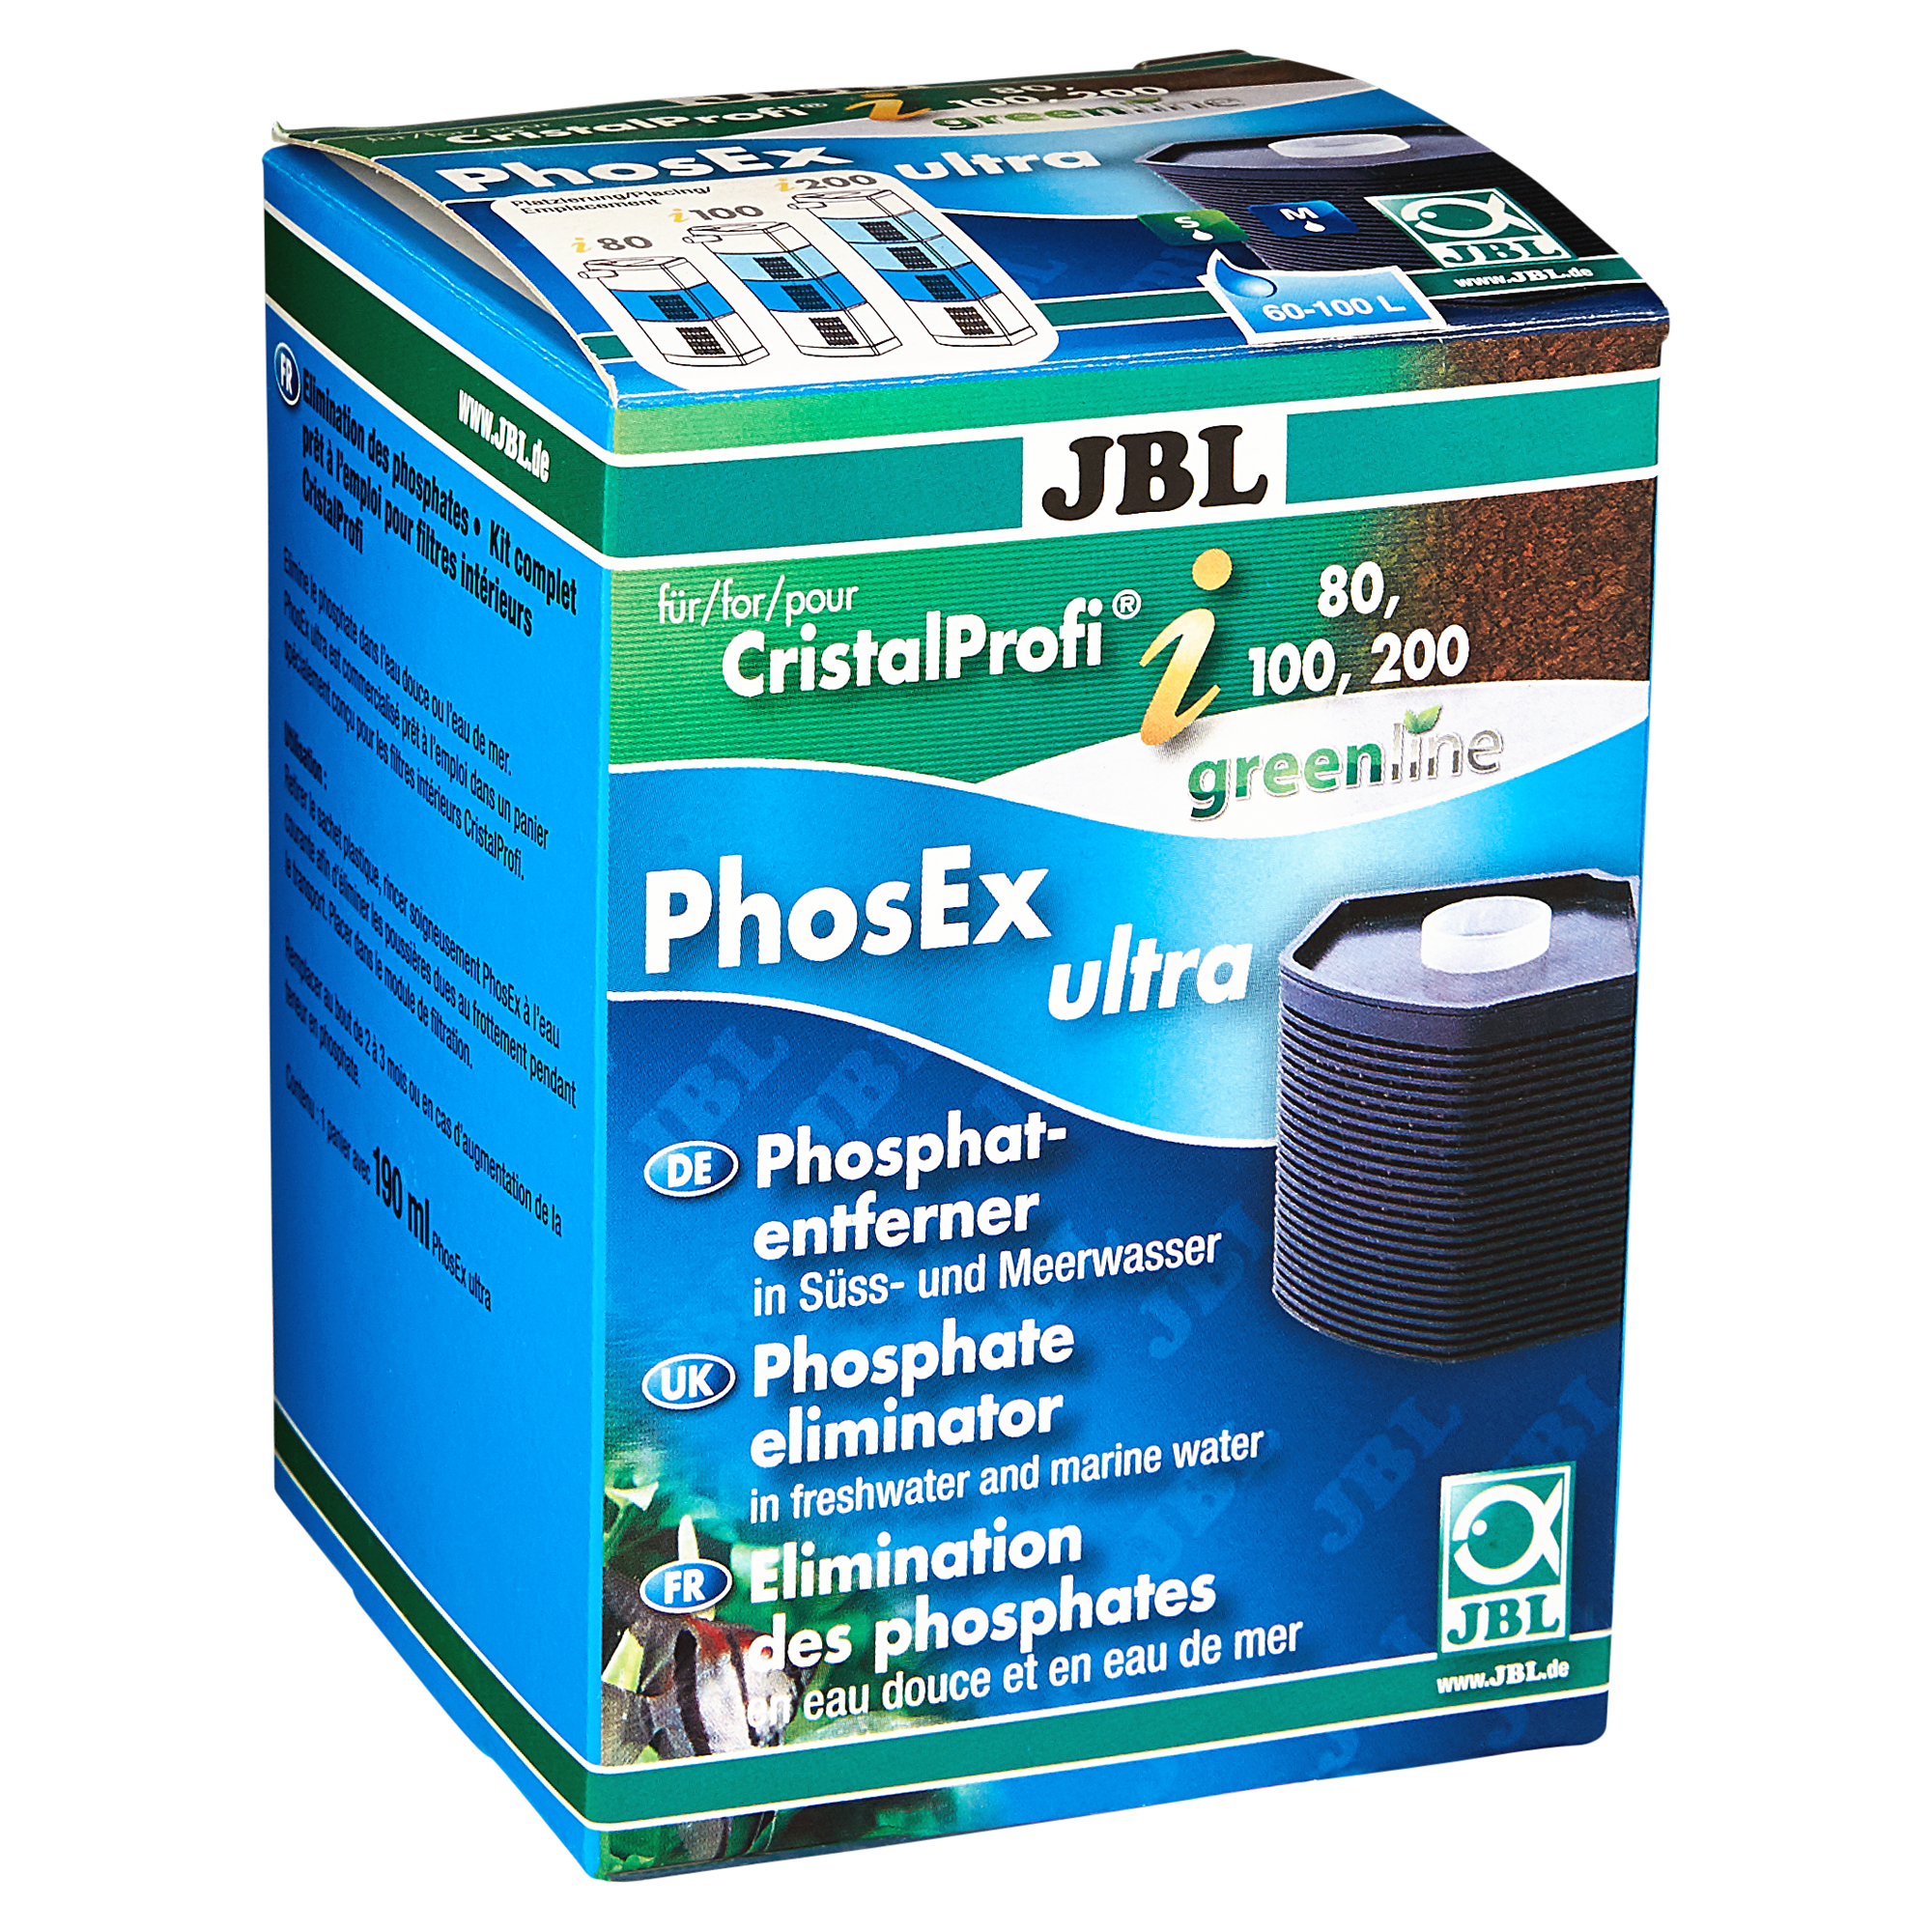 Filterkorb "CristalProfi i PhosEx ultra" 190 ml + product picture